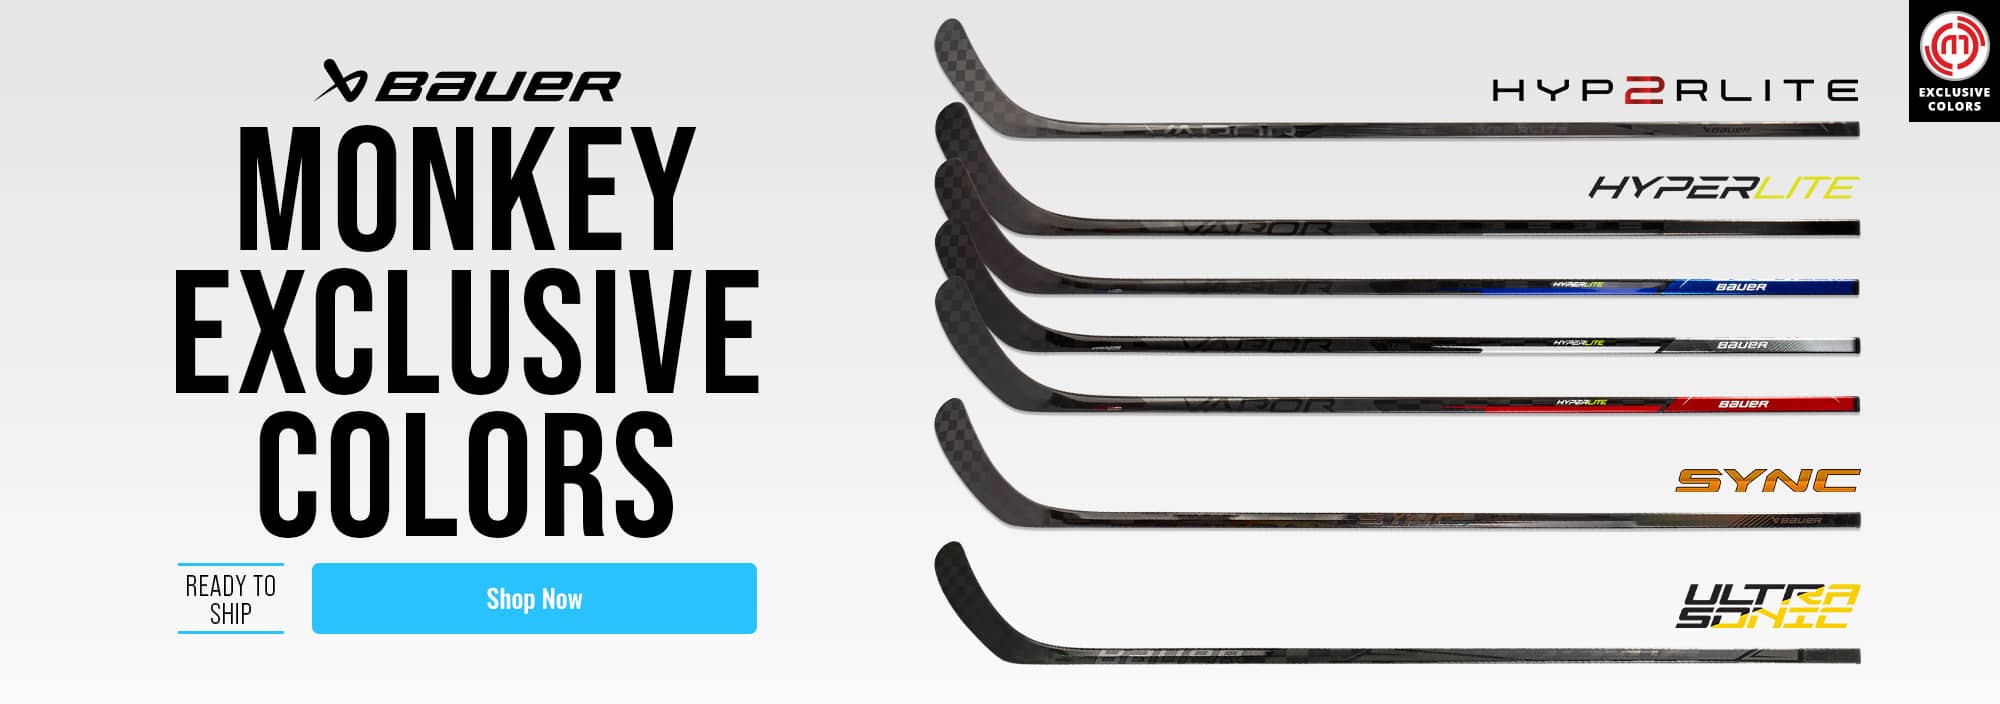 hockey shopping websites